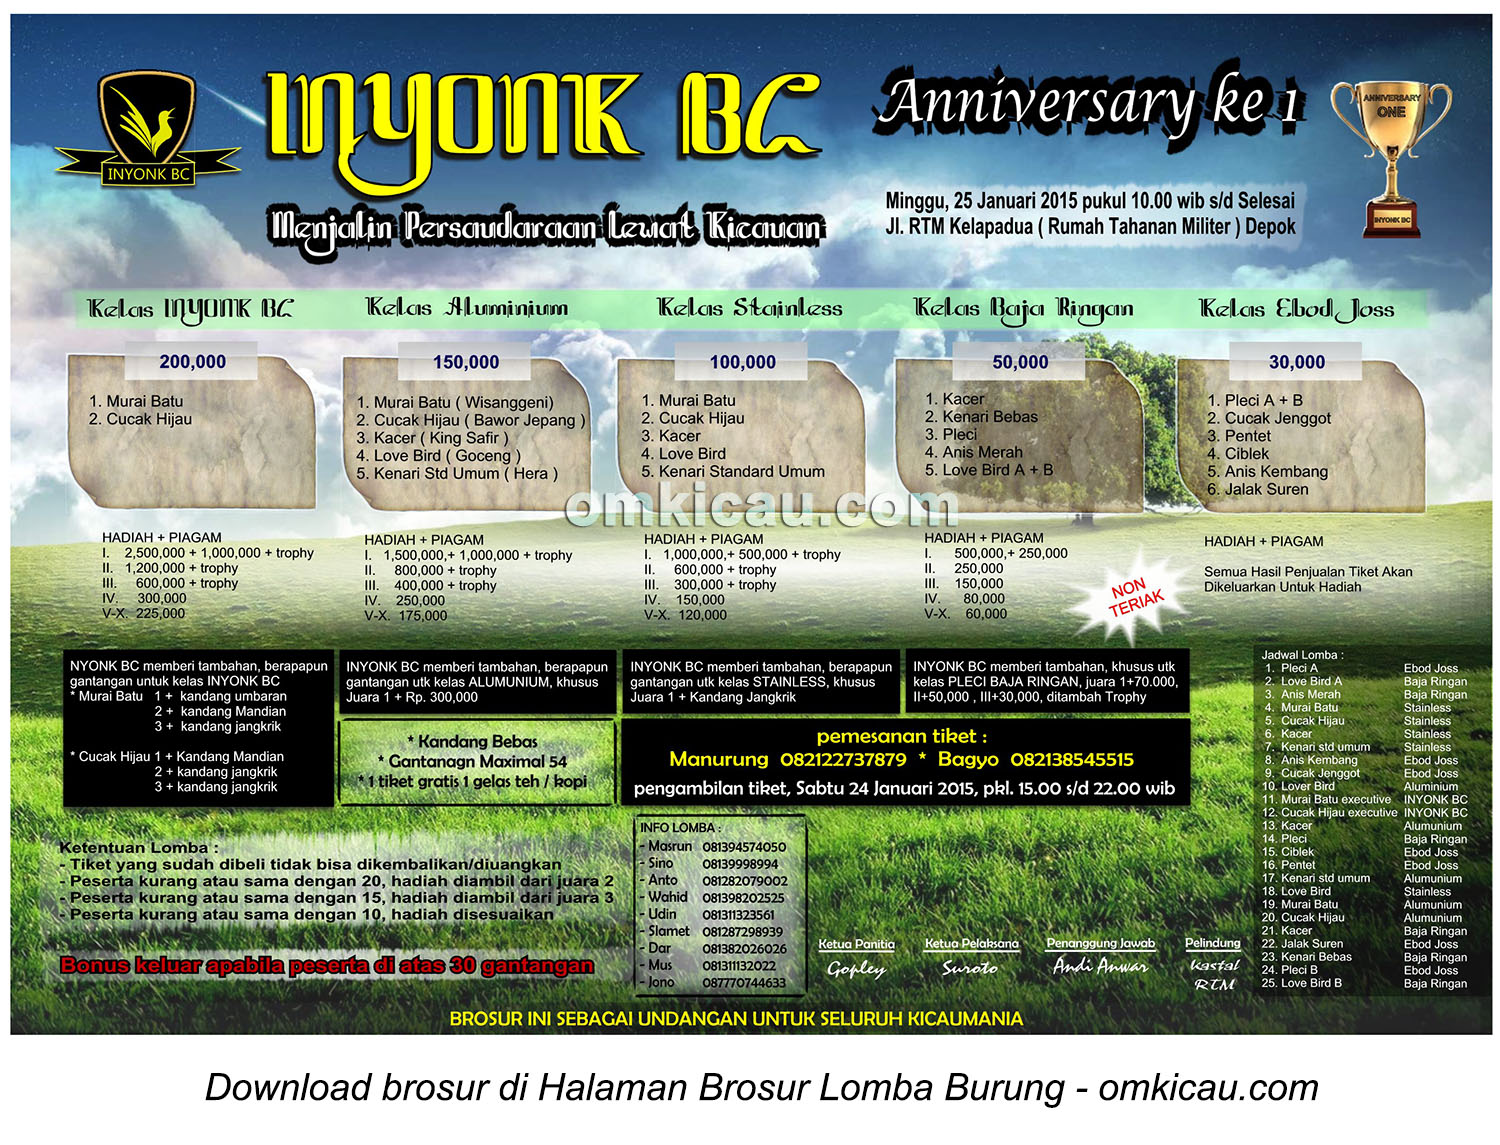 Brosur Lomba Burung Berkicau Anniversary Ke-1 Inyonk BC, Depok, 25 Januari 2015